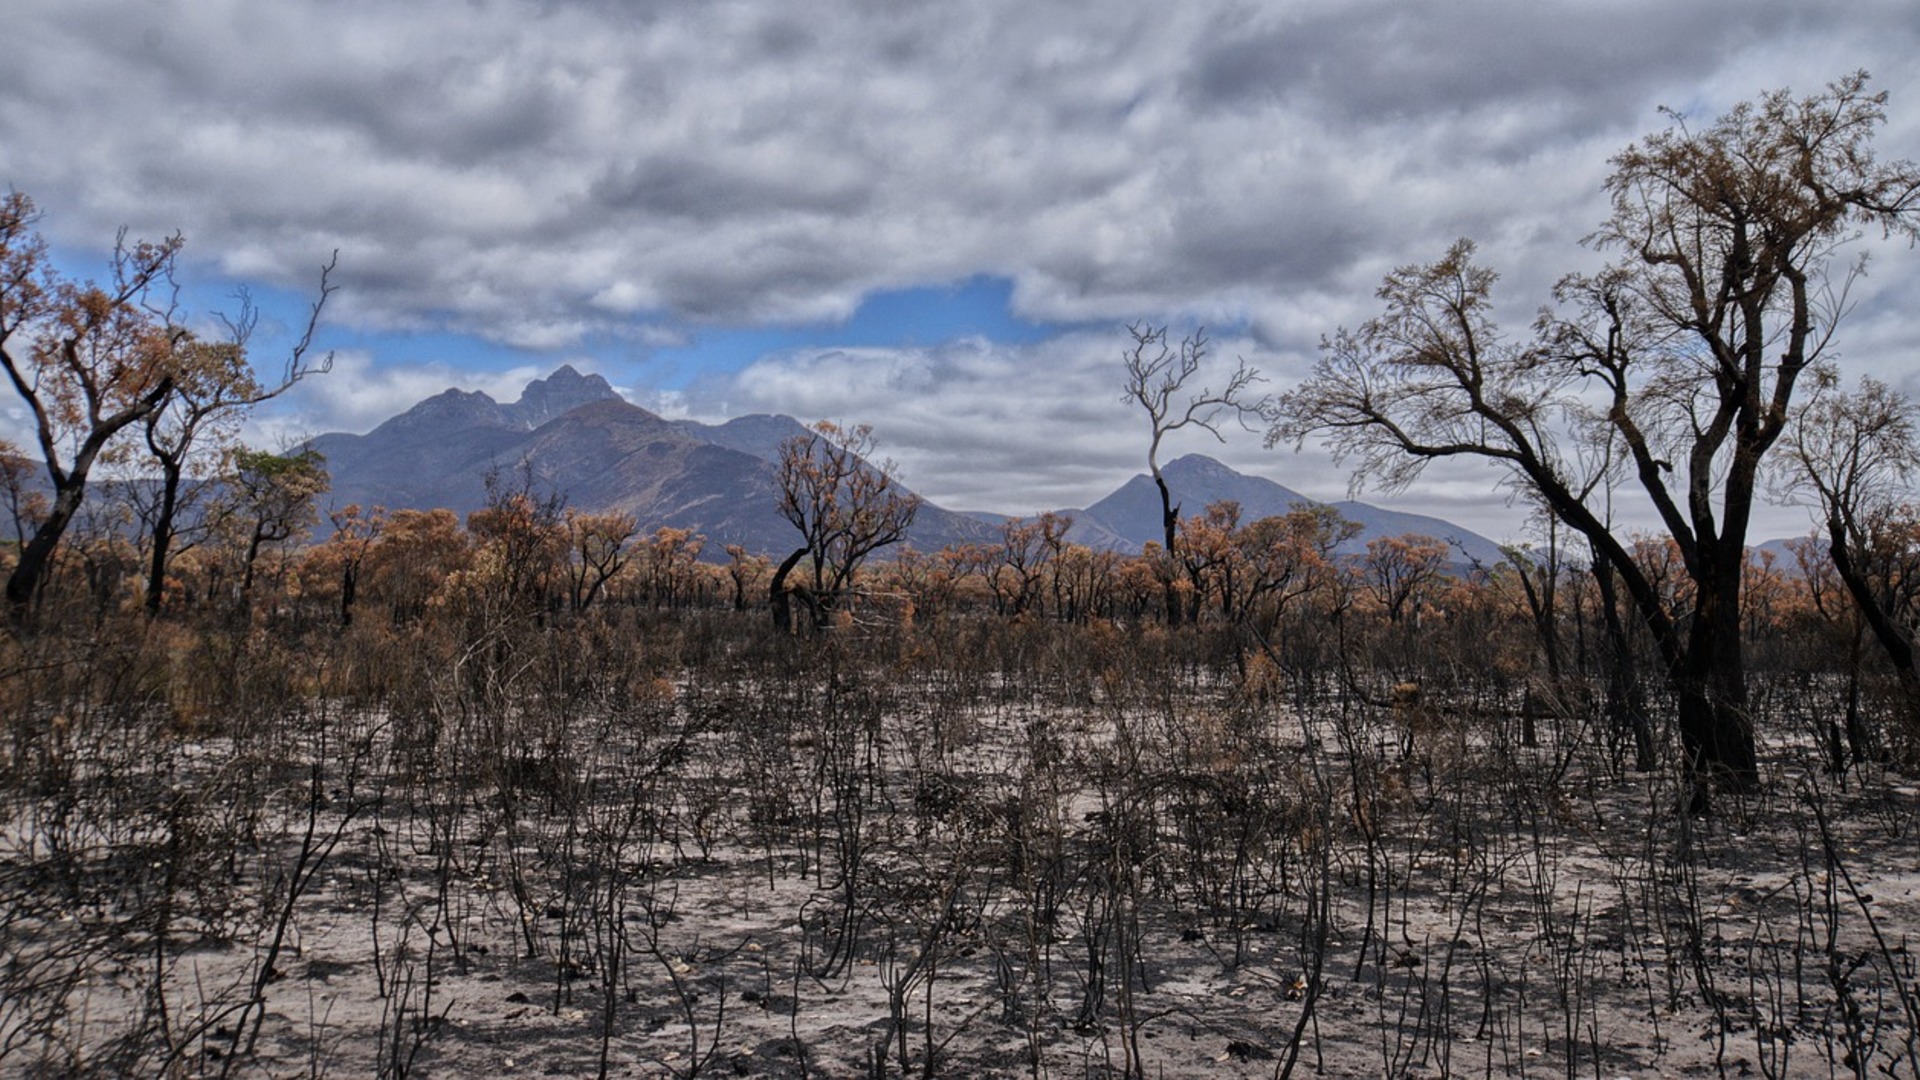 Restoring bushfire affected wildlife habitat on Kangaroo Island